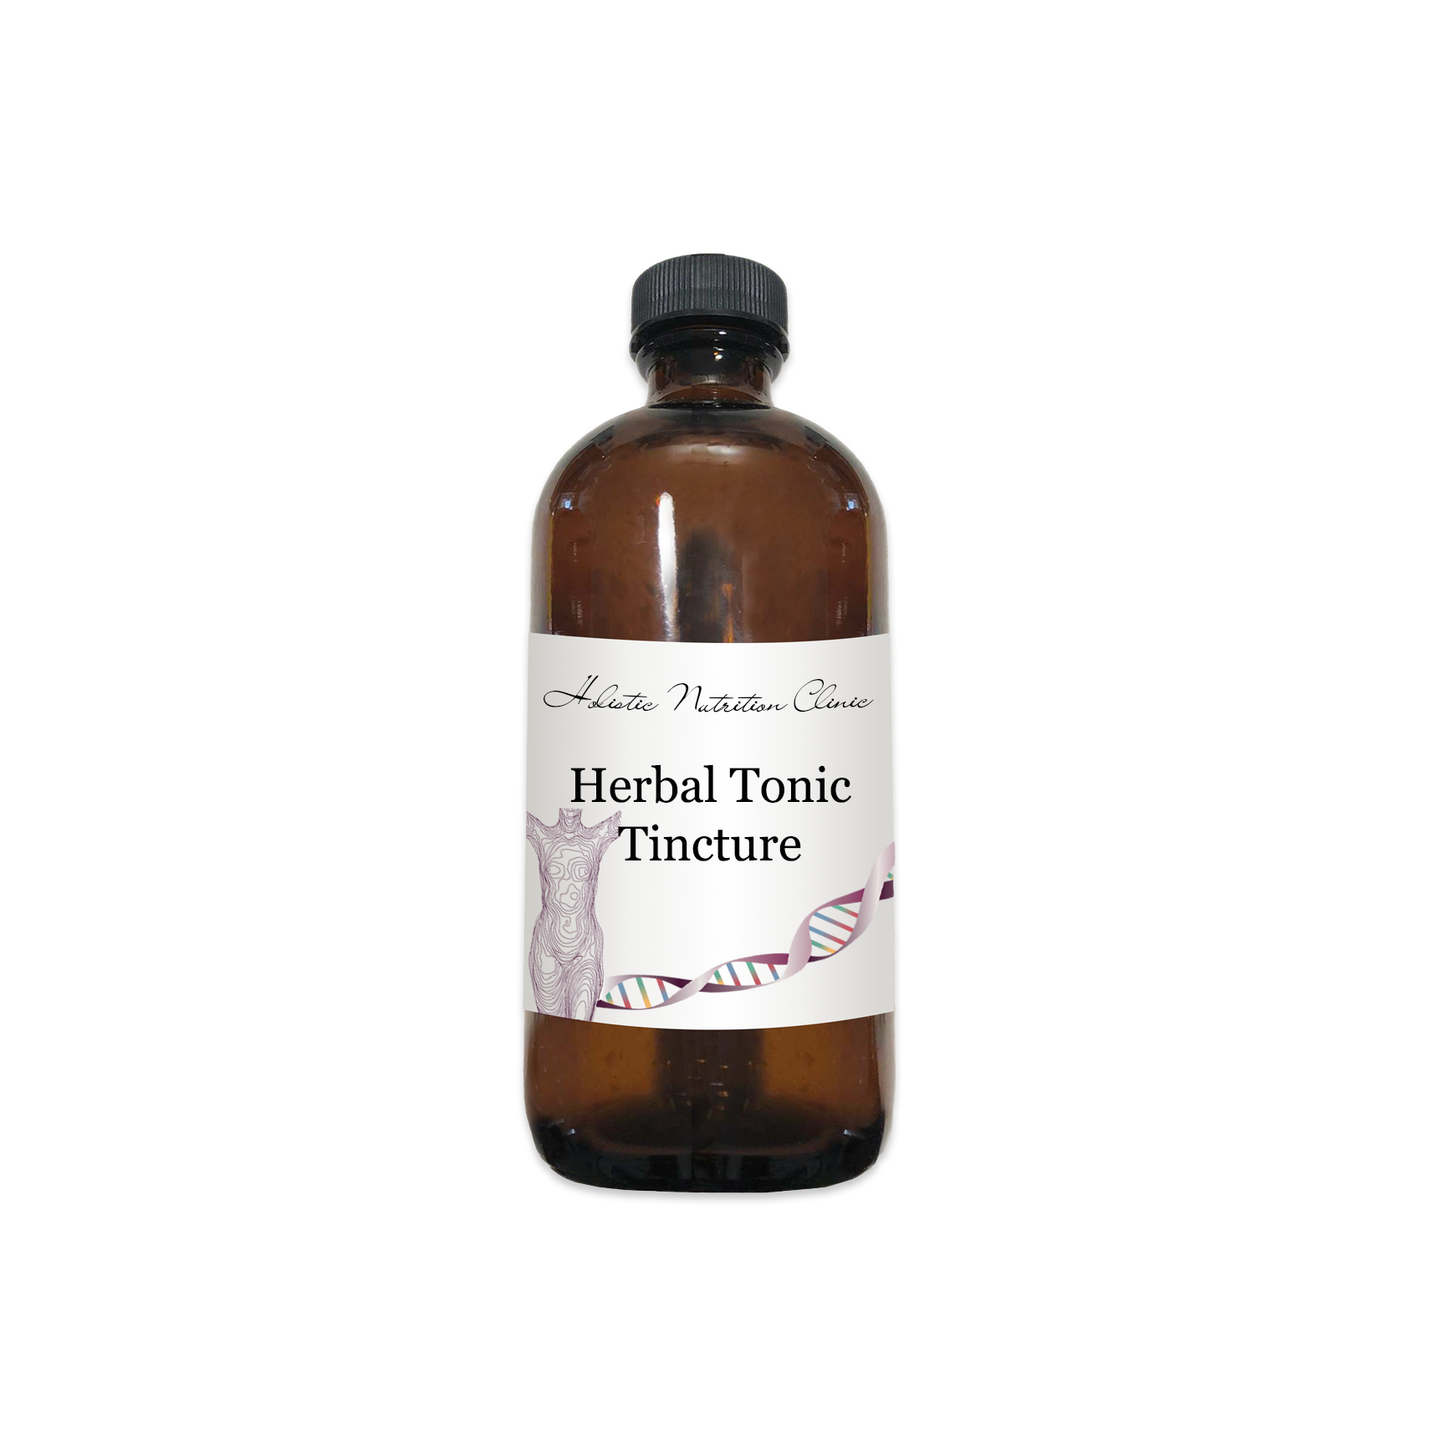 Herbal Tonic Tincture: Custom Made